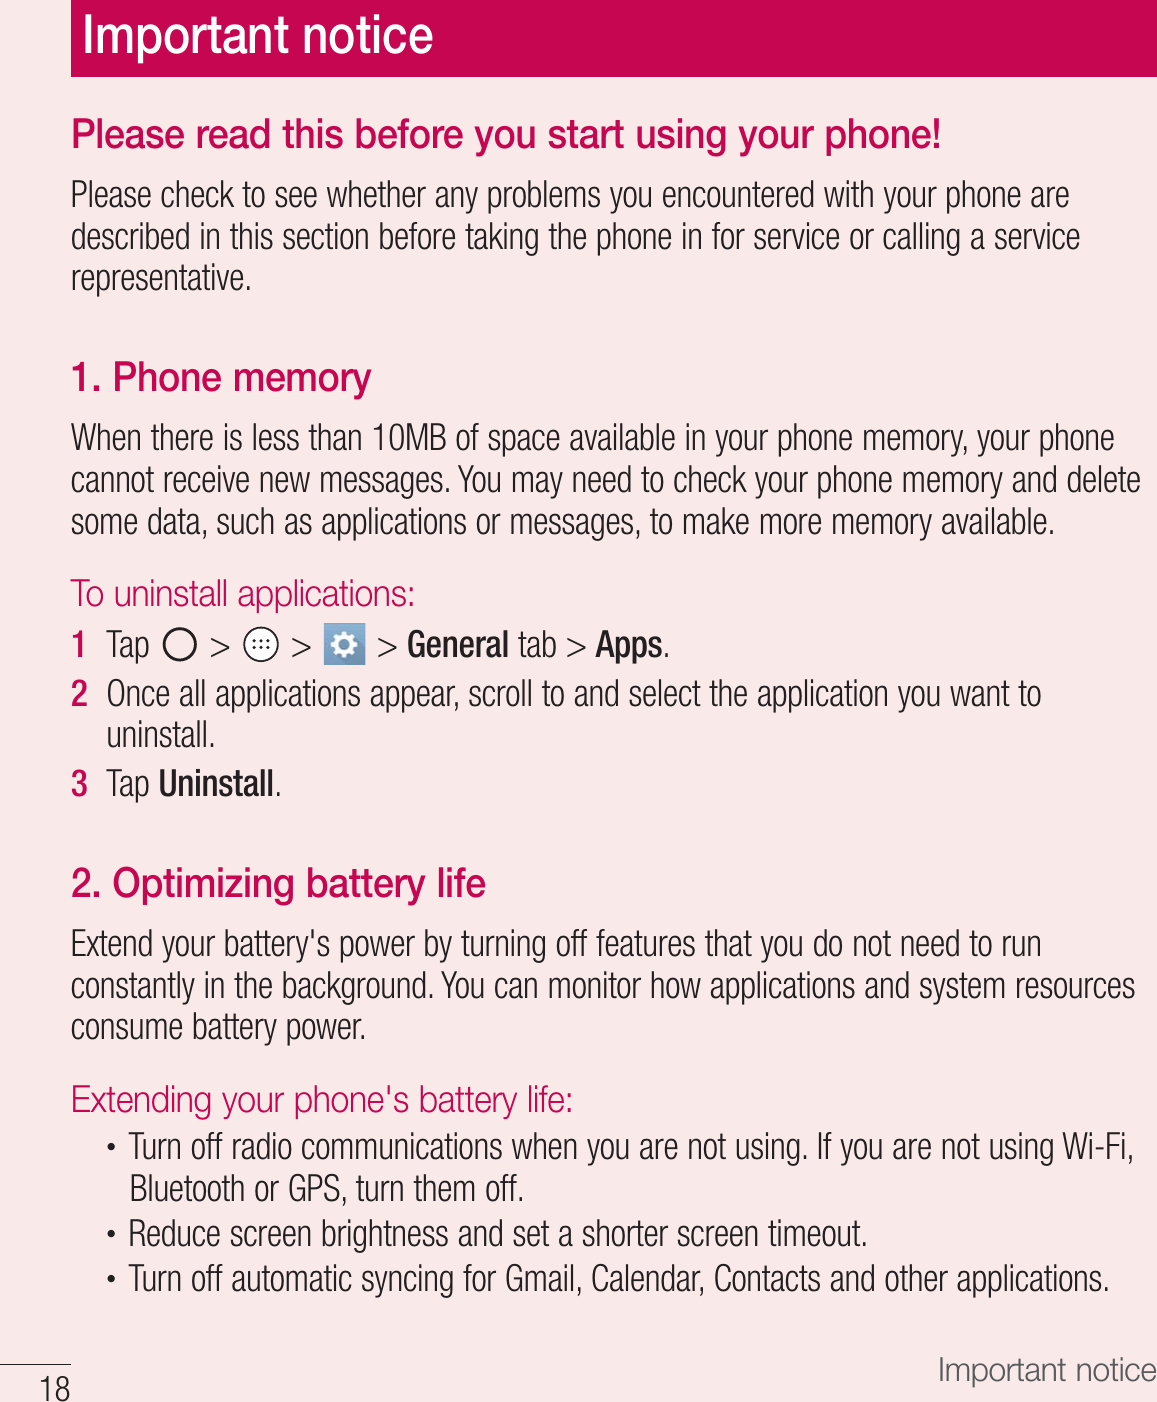  Important noticePlease read this before you start using your phone!1MFBTFDIFDLUPTFFXIFUIFSBOZQSPCMFNTZPVFODPVOUFSFEXJUIZPVSQIPOFBSFEFTDSJCFEJOUIJTTFDUJPOCFGPSFUBLJOHUIFQIPOFJOGPSTFSWJDFPSDBMMJOHBTFSWJDFSFQSFTFOUBUJWF1. Phone memory8IFOUIFSFJTMFTTUIBO.#PGTQBDFBWBJMBCMFJOZPVSQIPOFNFNPSZZPVSQIPOFDBOOPUSFDFJWFOFXNFTTBHFT:PVNBZOFFEUPDIFDLZPVSQIPOFNFNPSZBOEEFMFUFTPNFEBUBTVDIBTBQQMJDBUJPOTPSNFTTBHFTUPNBLFNPSFNFNPSZBWBJMBCMFTo uninstall applications:1  5BQ   GeneralUBCApps2  0ODFBMMBQQMJDBUJPOTBQQFBSTDSPMMUPBOETFMFDUUIFBQQMJDBUJPOZPVXBOUUPVOJOTUBMM3  5BQUninstall2. Optimizing battery life&amp;YUFOEZPVSCBUUFSZhTQPXFSCZUVSOJOHPGGGFBUVSFTUIBUZPVEPOPUOFFEUPSVODPOTUBOUMZJOUIFCBDLHSPVOE:PVDBONPOJUPSIPXBQQMJDBUJPOTBOETZTUFNSFTPVSDFTDPOTVNFCBUUFSZQPXFSExtending your phone&apos;s battery life:t 5VSOPGGSBEJPDPNNVOJDBUJPOTXIFOZPVBSFOPUVTJOH*GZPVBSFOPUVTJOH8J&apos;J#MVFUPPUIPS(14UVSOUIFNPGGt 3FEVDFTDSFFOCSJHIUOFTTBOETFUBTIPSUFSTDSFFOUJNFPVUt 5VSOPGGBVUPNBUJDTZODJOHGPS(NBJM$BMFOEBS$POUBDUTBOEPUIFSBQQMJDBUJPOTImportant notice